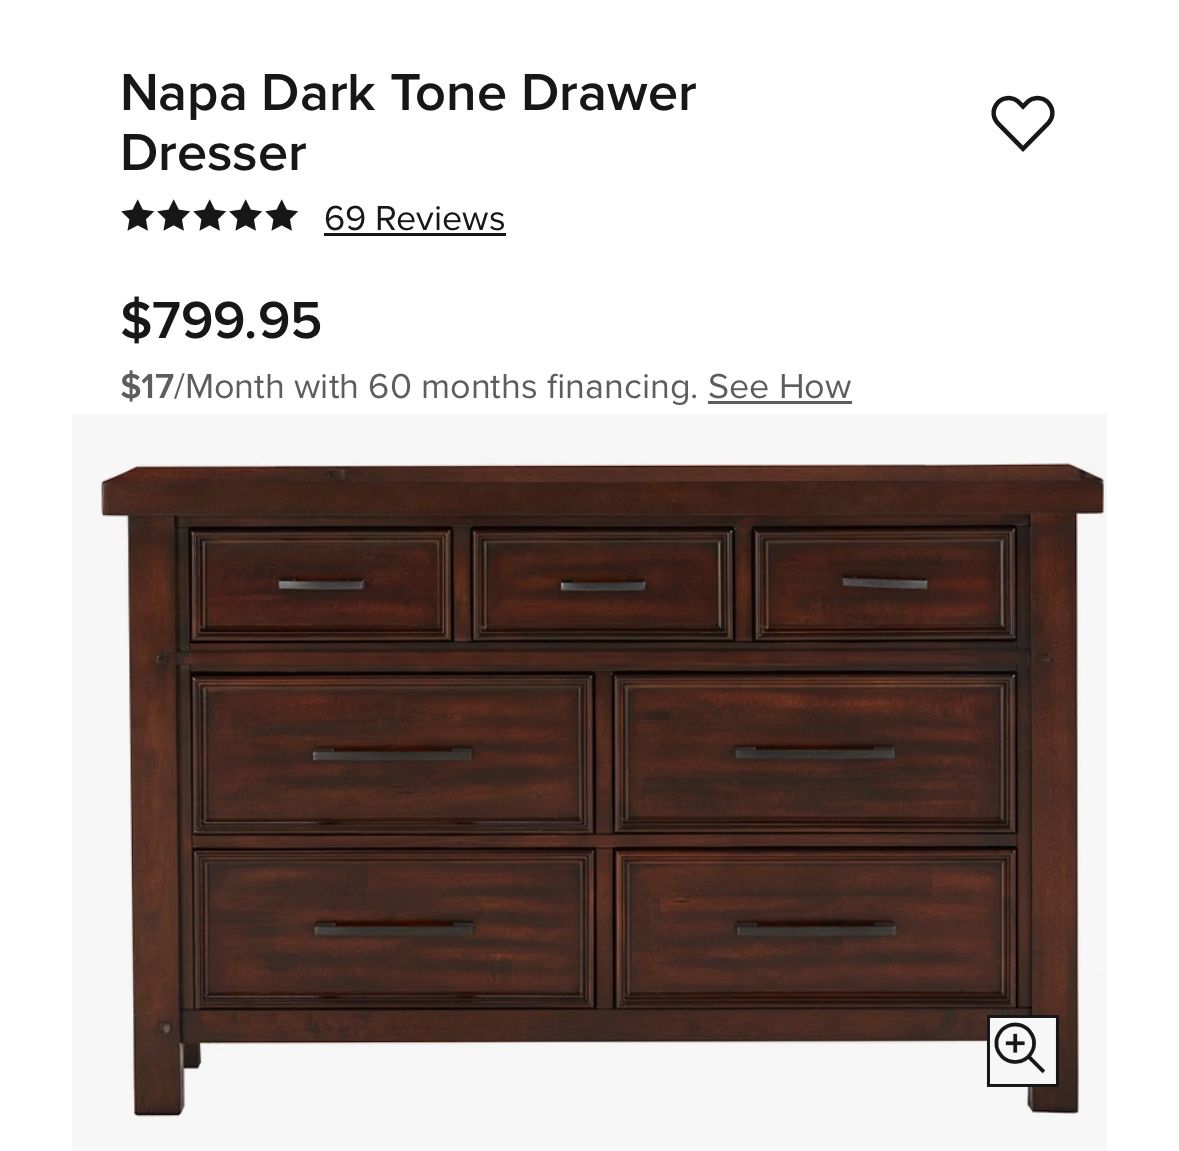 Napa Dark tone Drawer Dresser